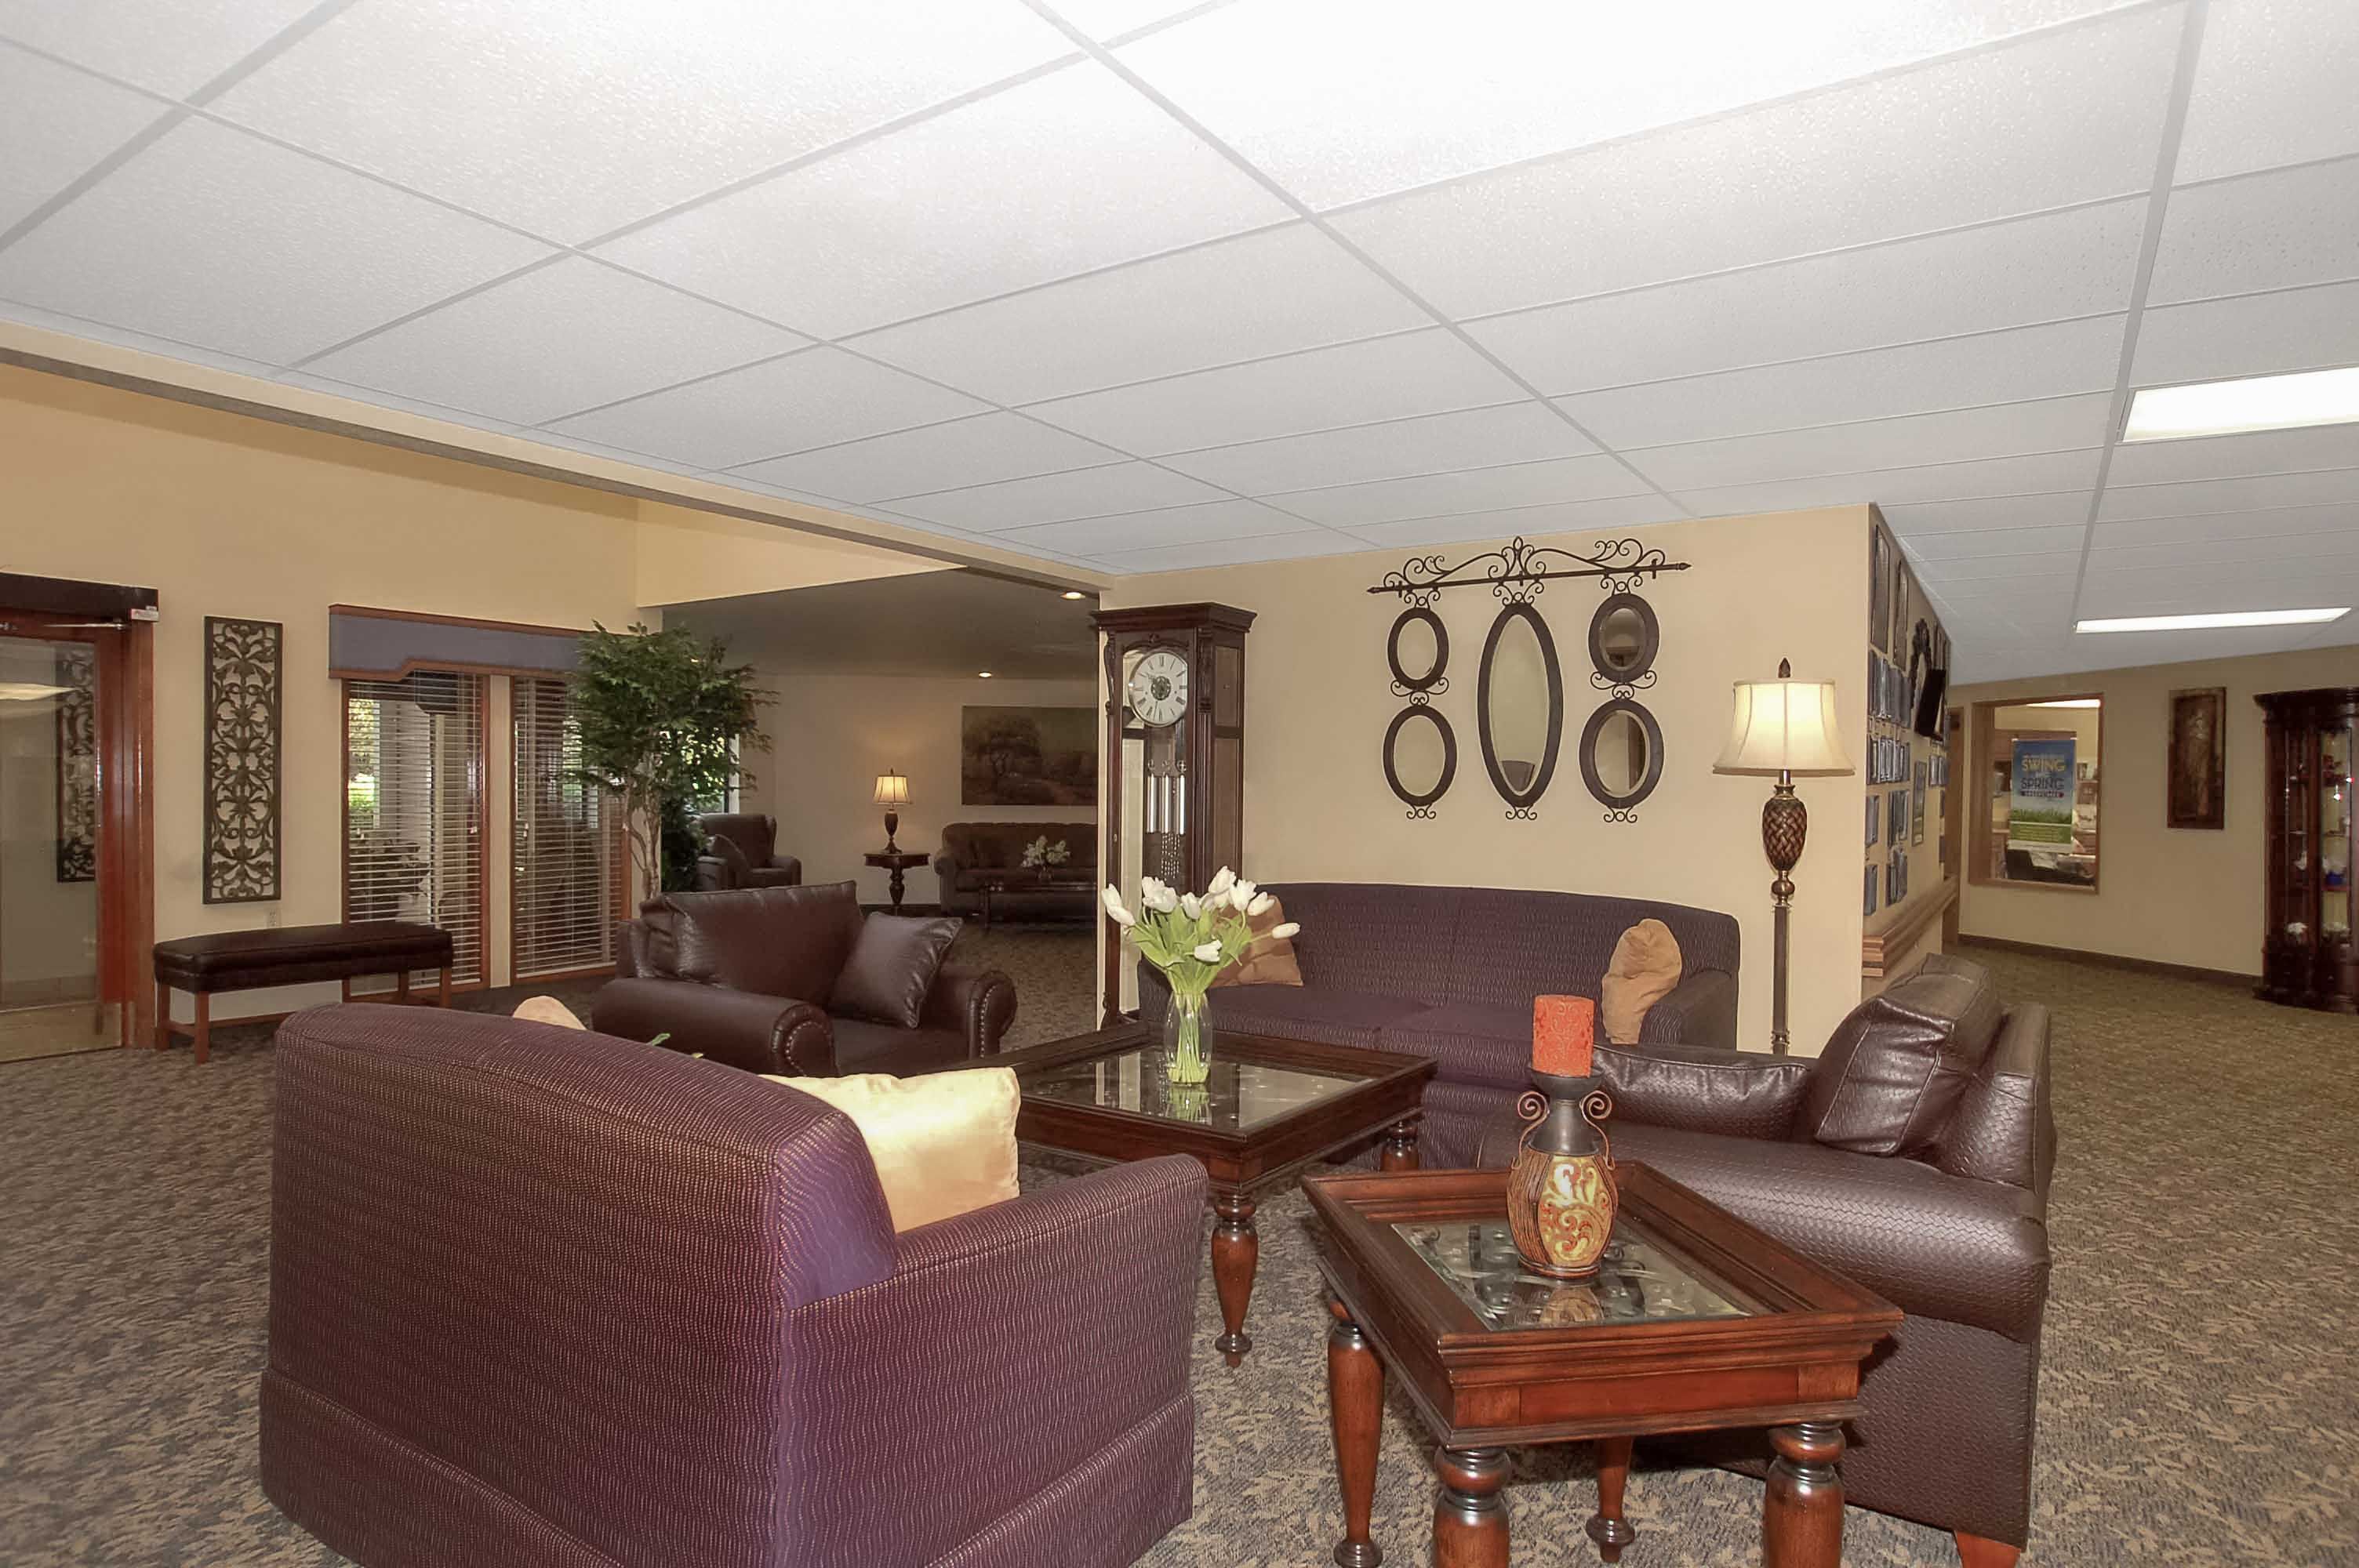 Senior living community reception room at Parkwood Estates with elegant decor and furniture.